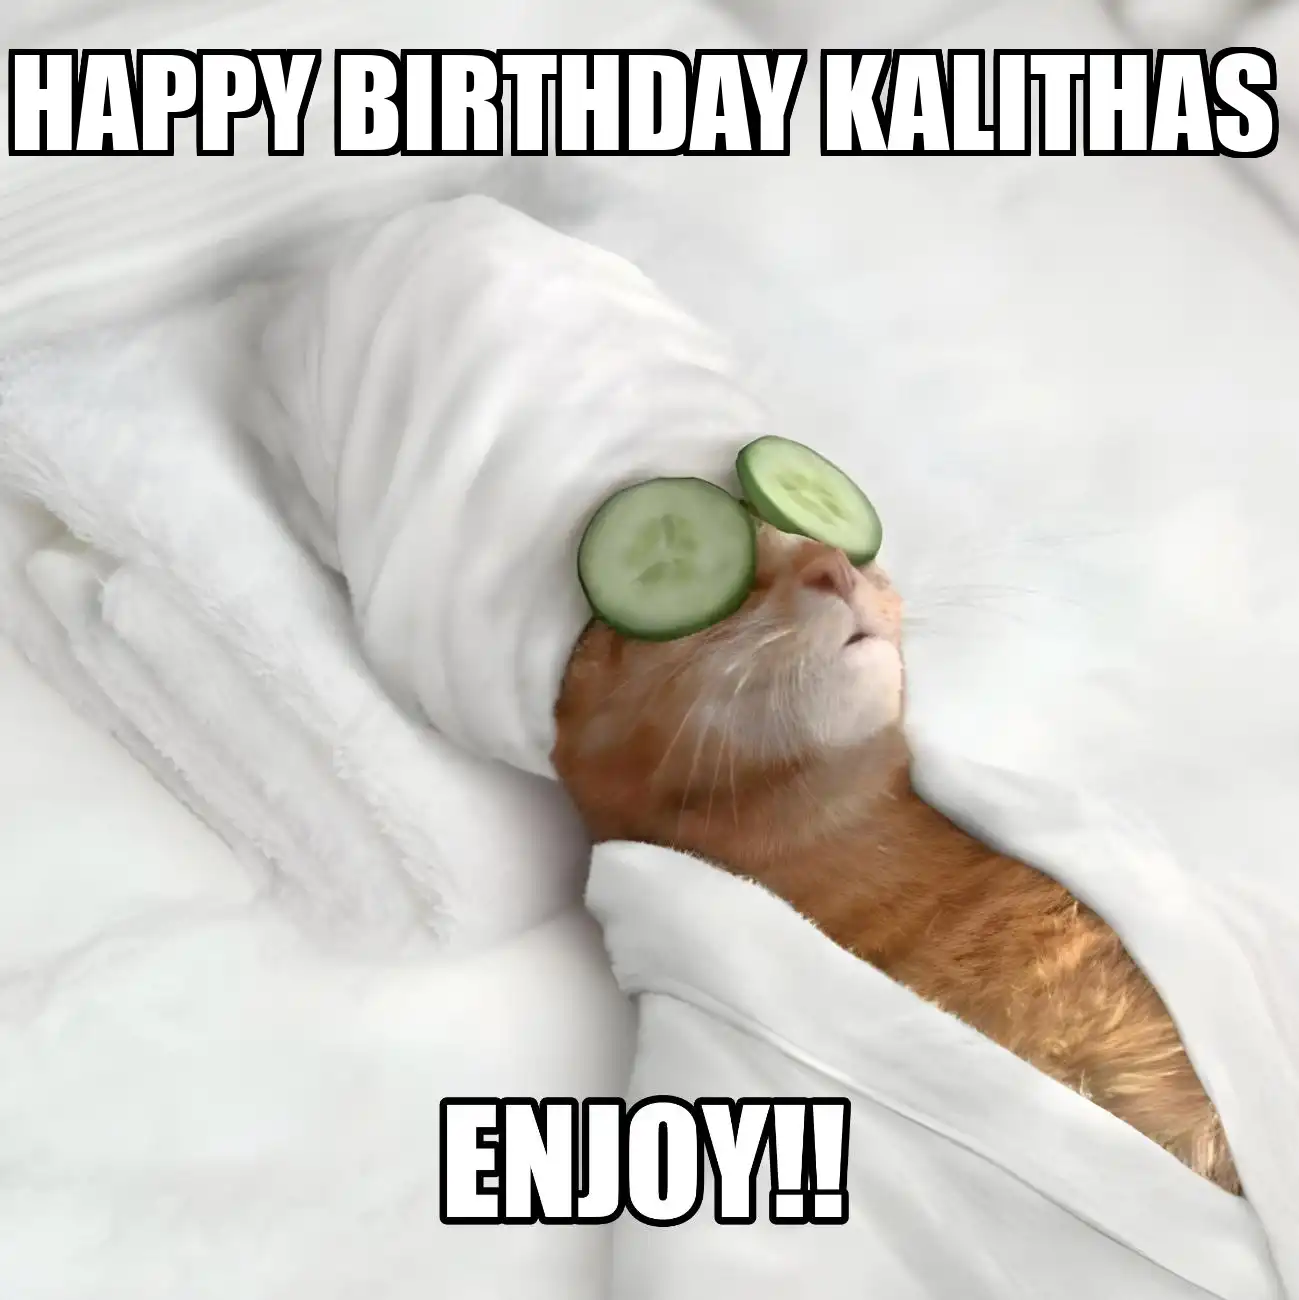 Happy Birthday Kalithas Enjoy Cat Meme